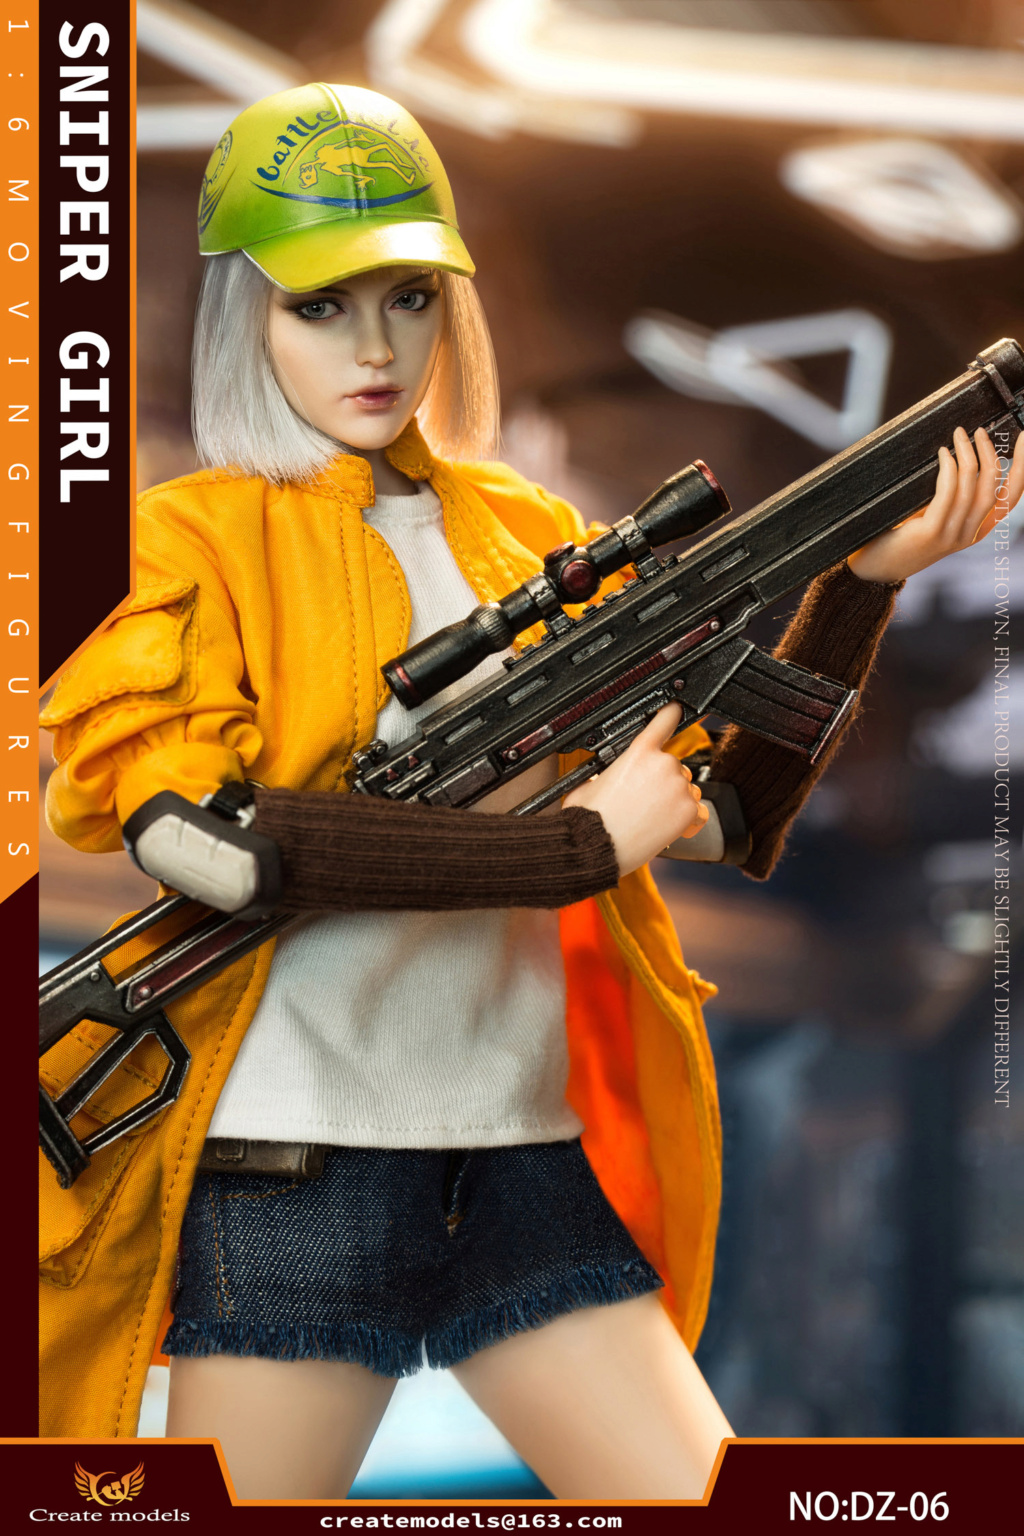 ModernMilitary - NEW PRODUCT: Createmodels: 1/6 Sniper Girl-Songbird/Lan Action Figures #DZ-05/DZ-06 18535310